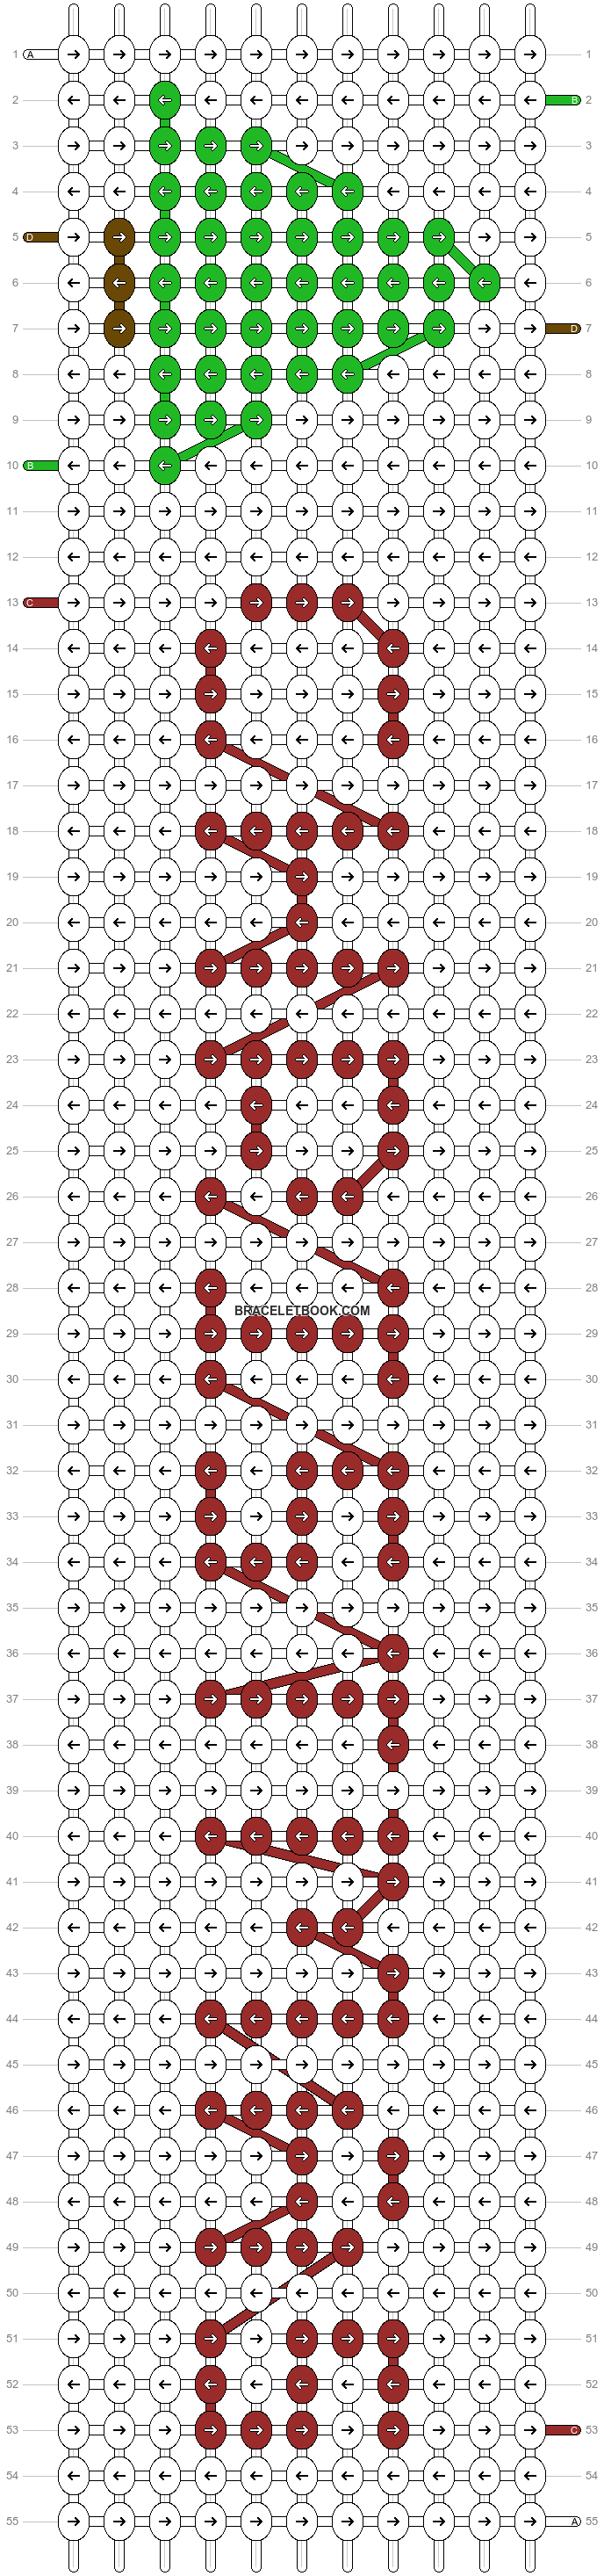 Alpha pattern #16558 variation #26380 pattern